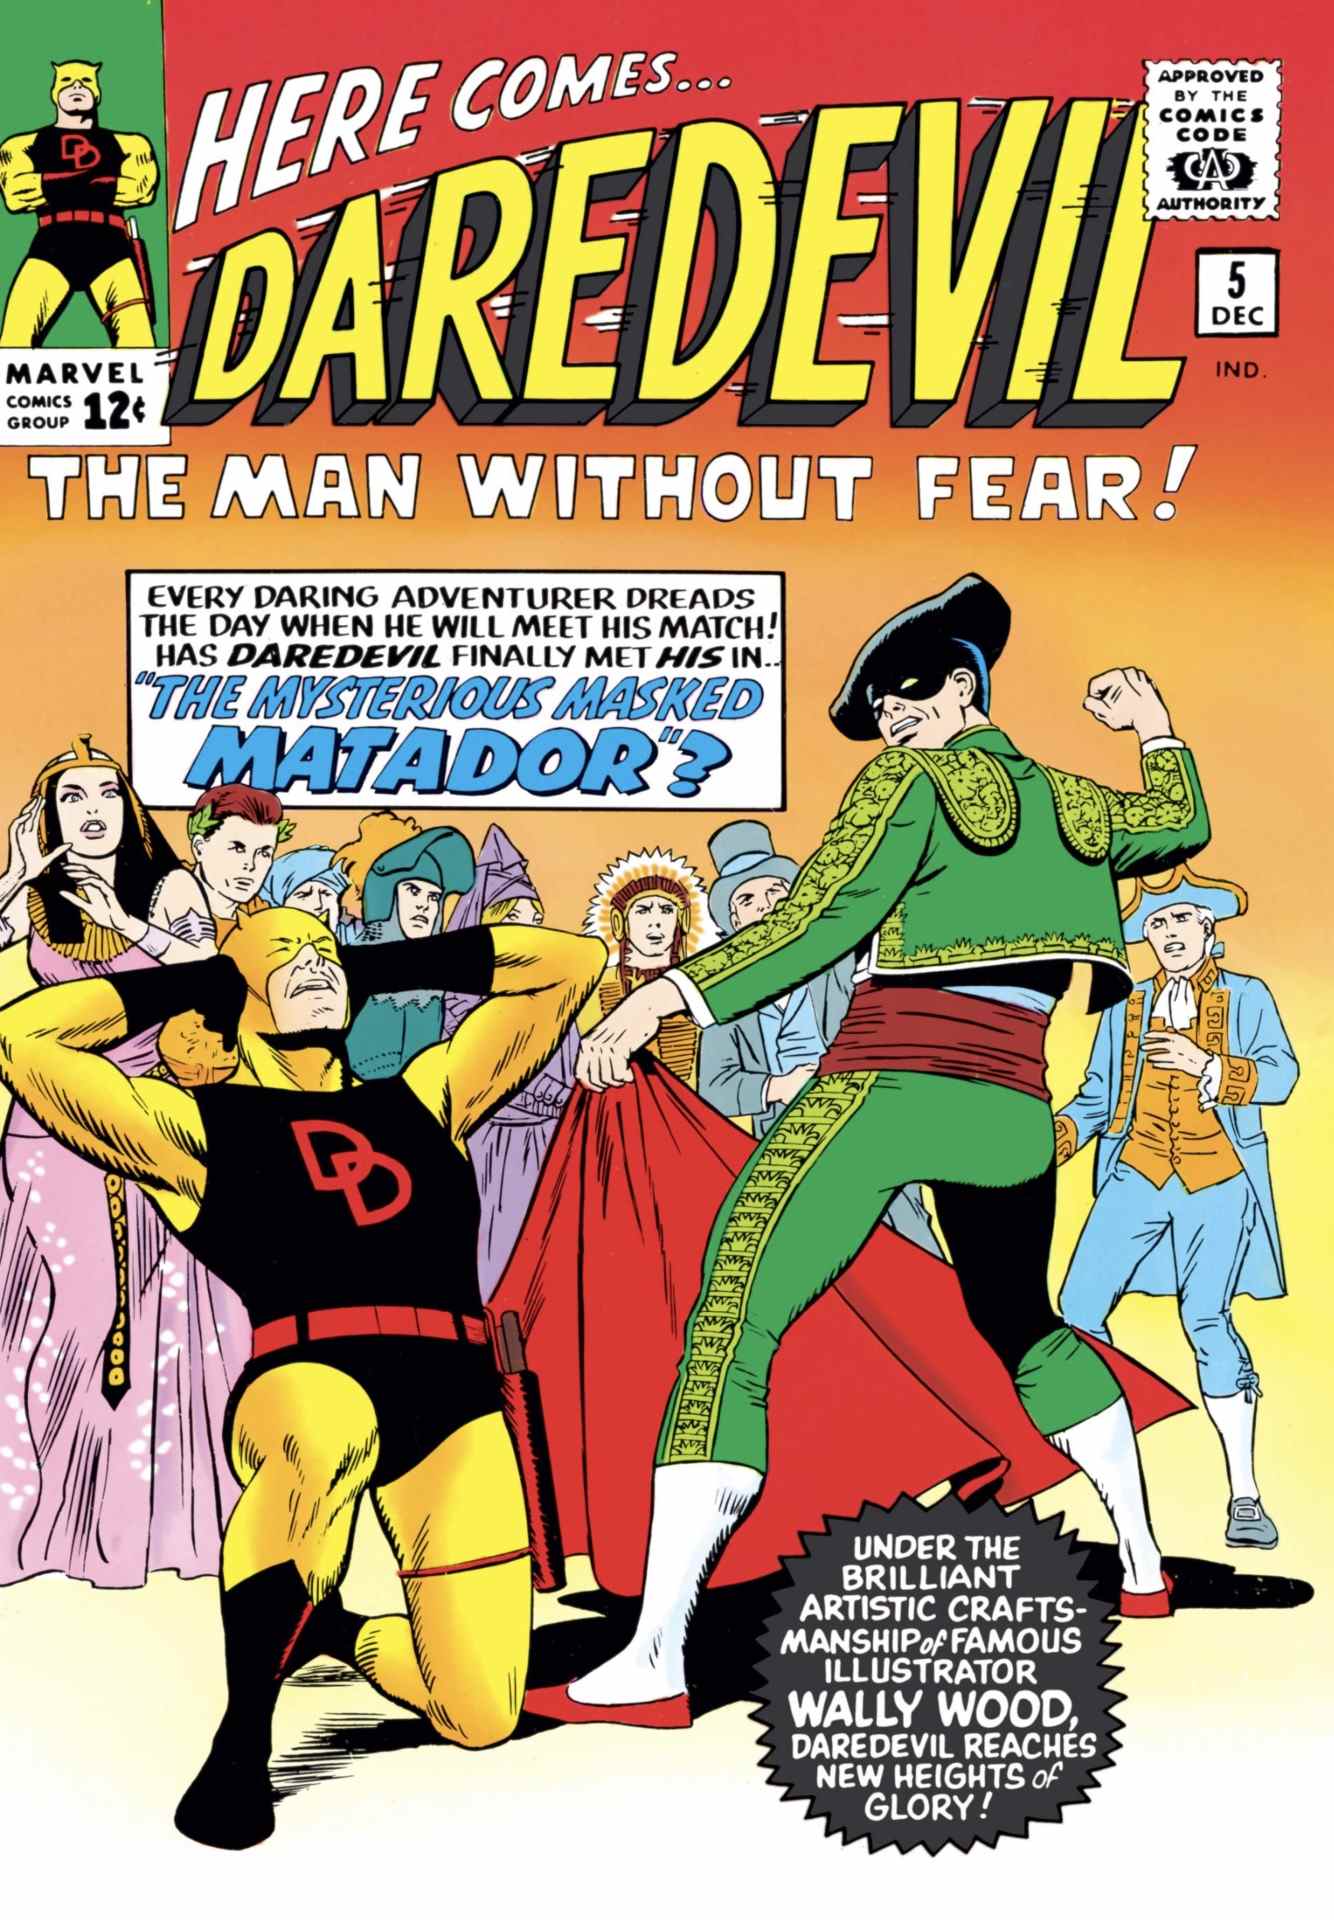 Couverture de Daredevil #5